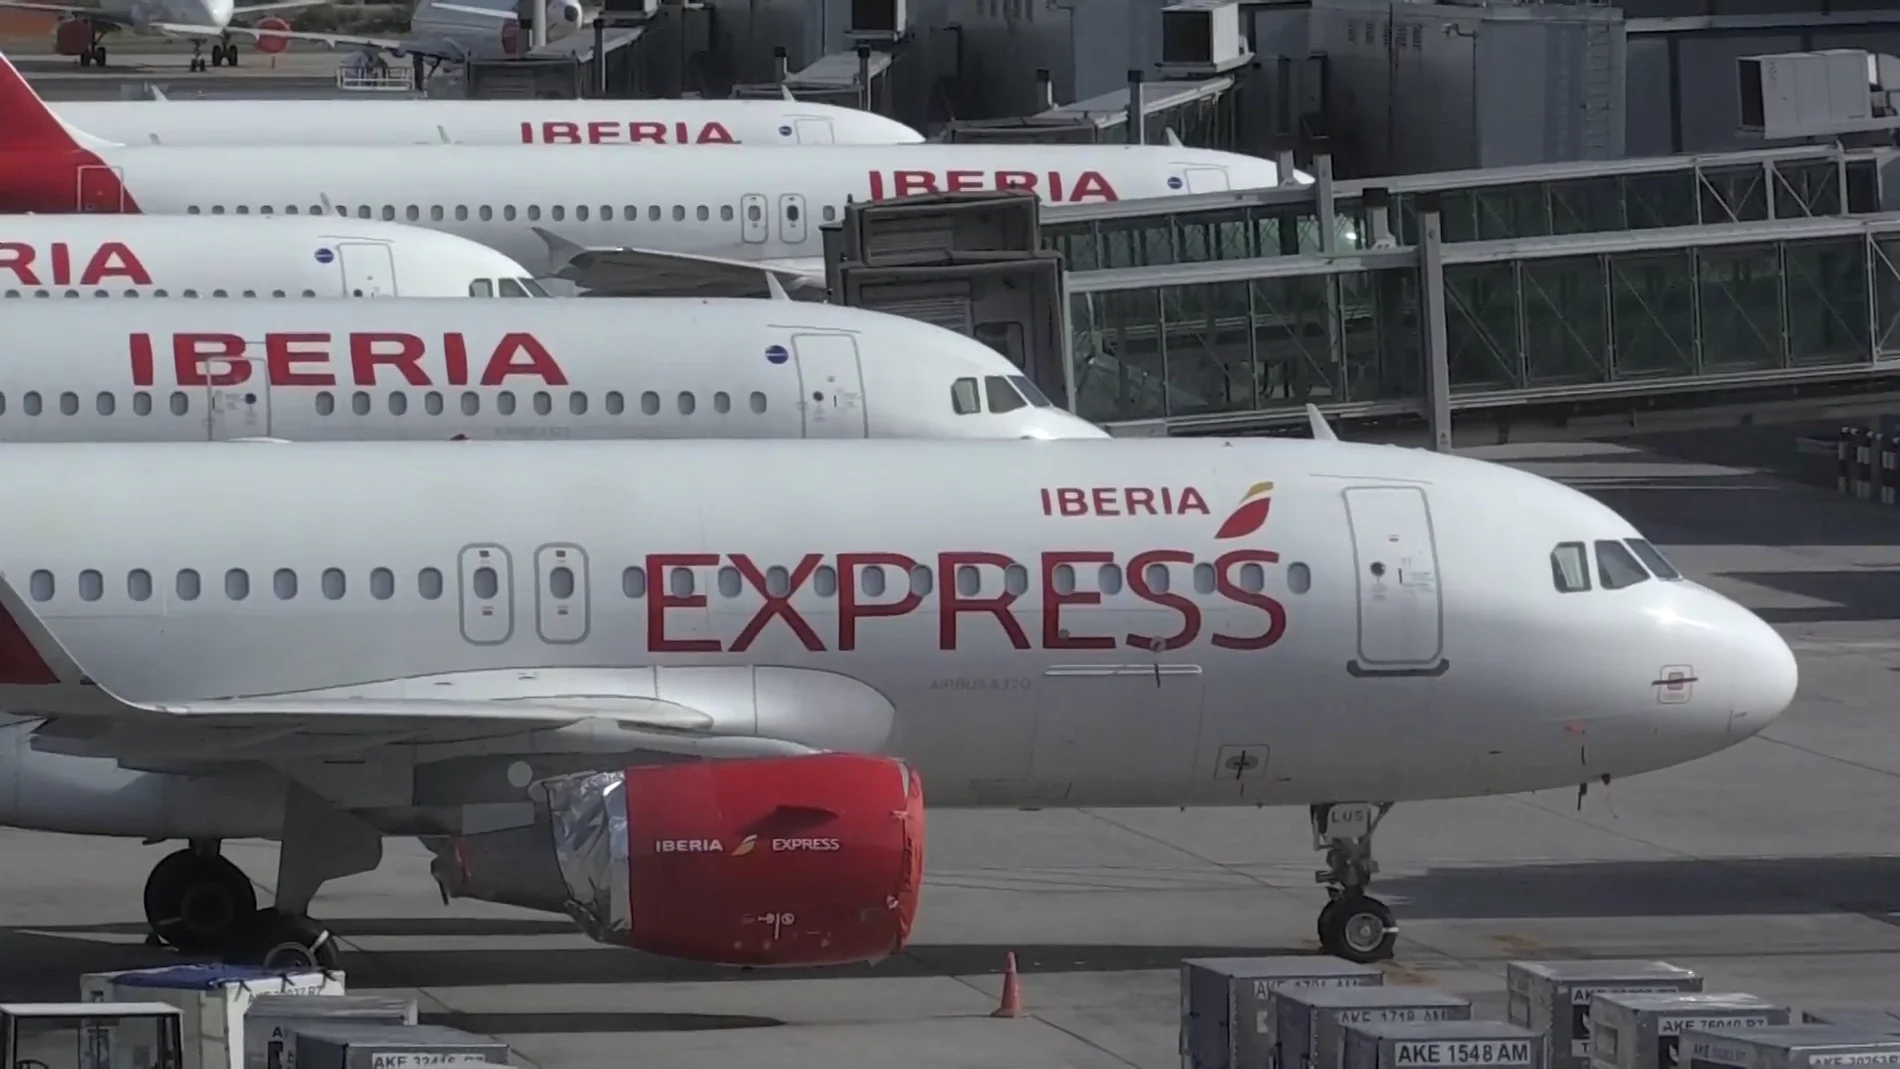 Huelga de Iberia Express y EasyJet: consulta